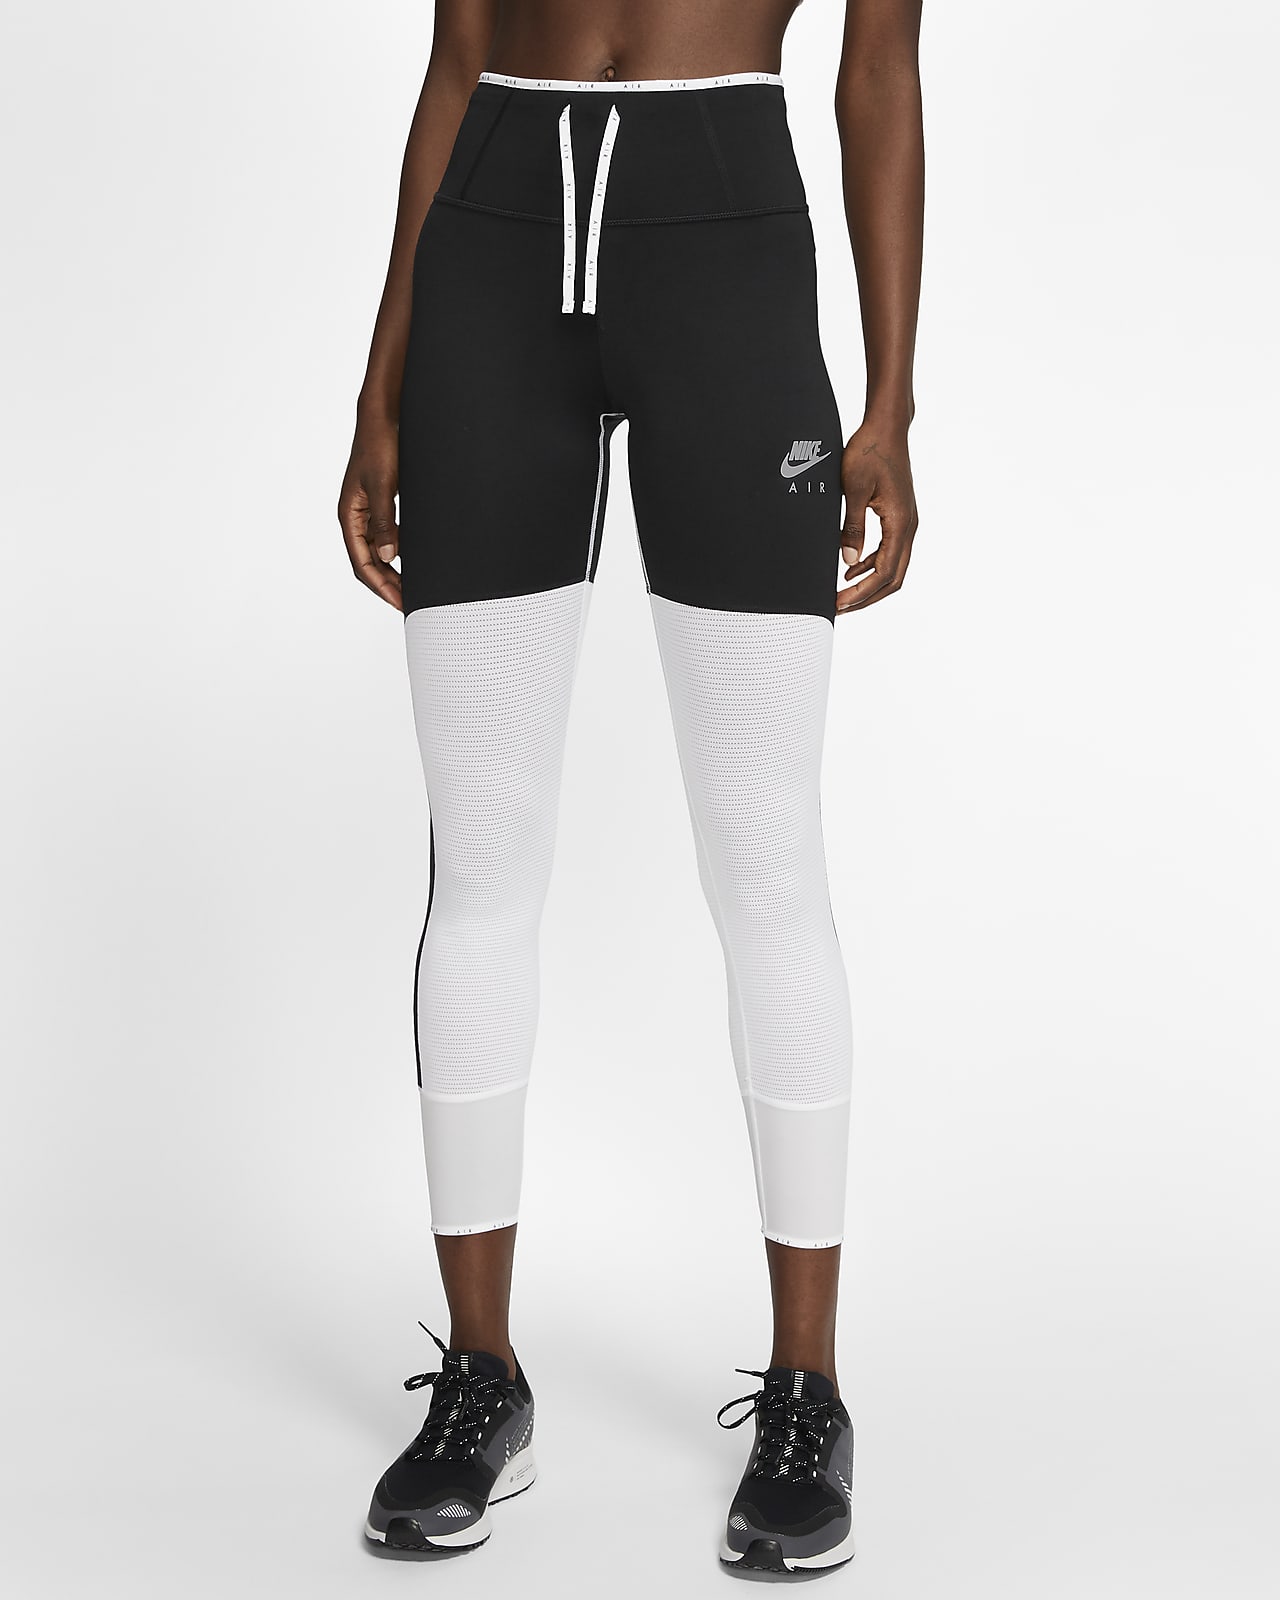 Nike Air Women's 7/8 Running Tights 